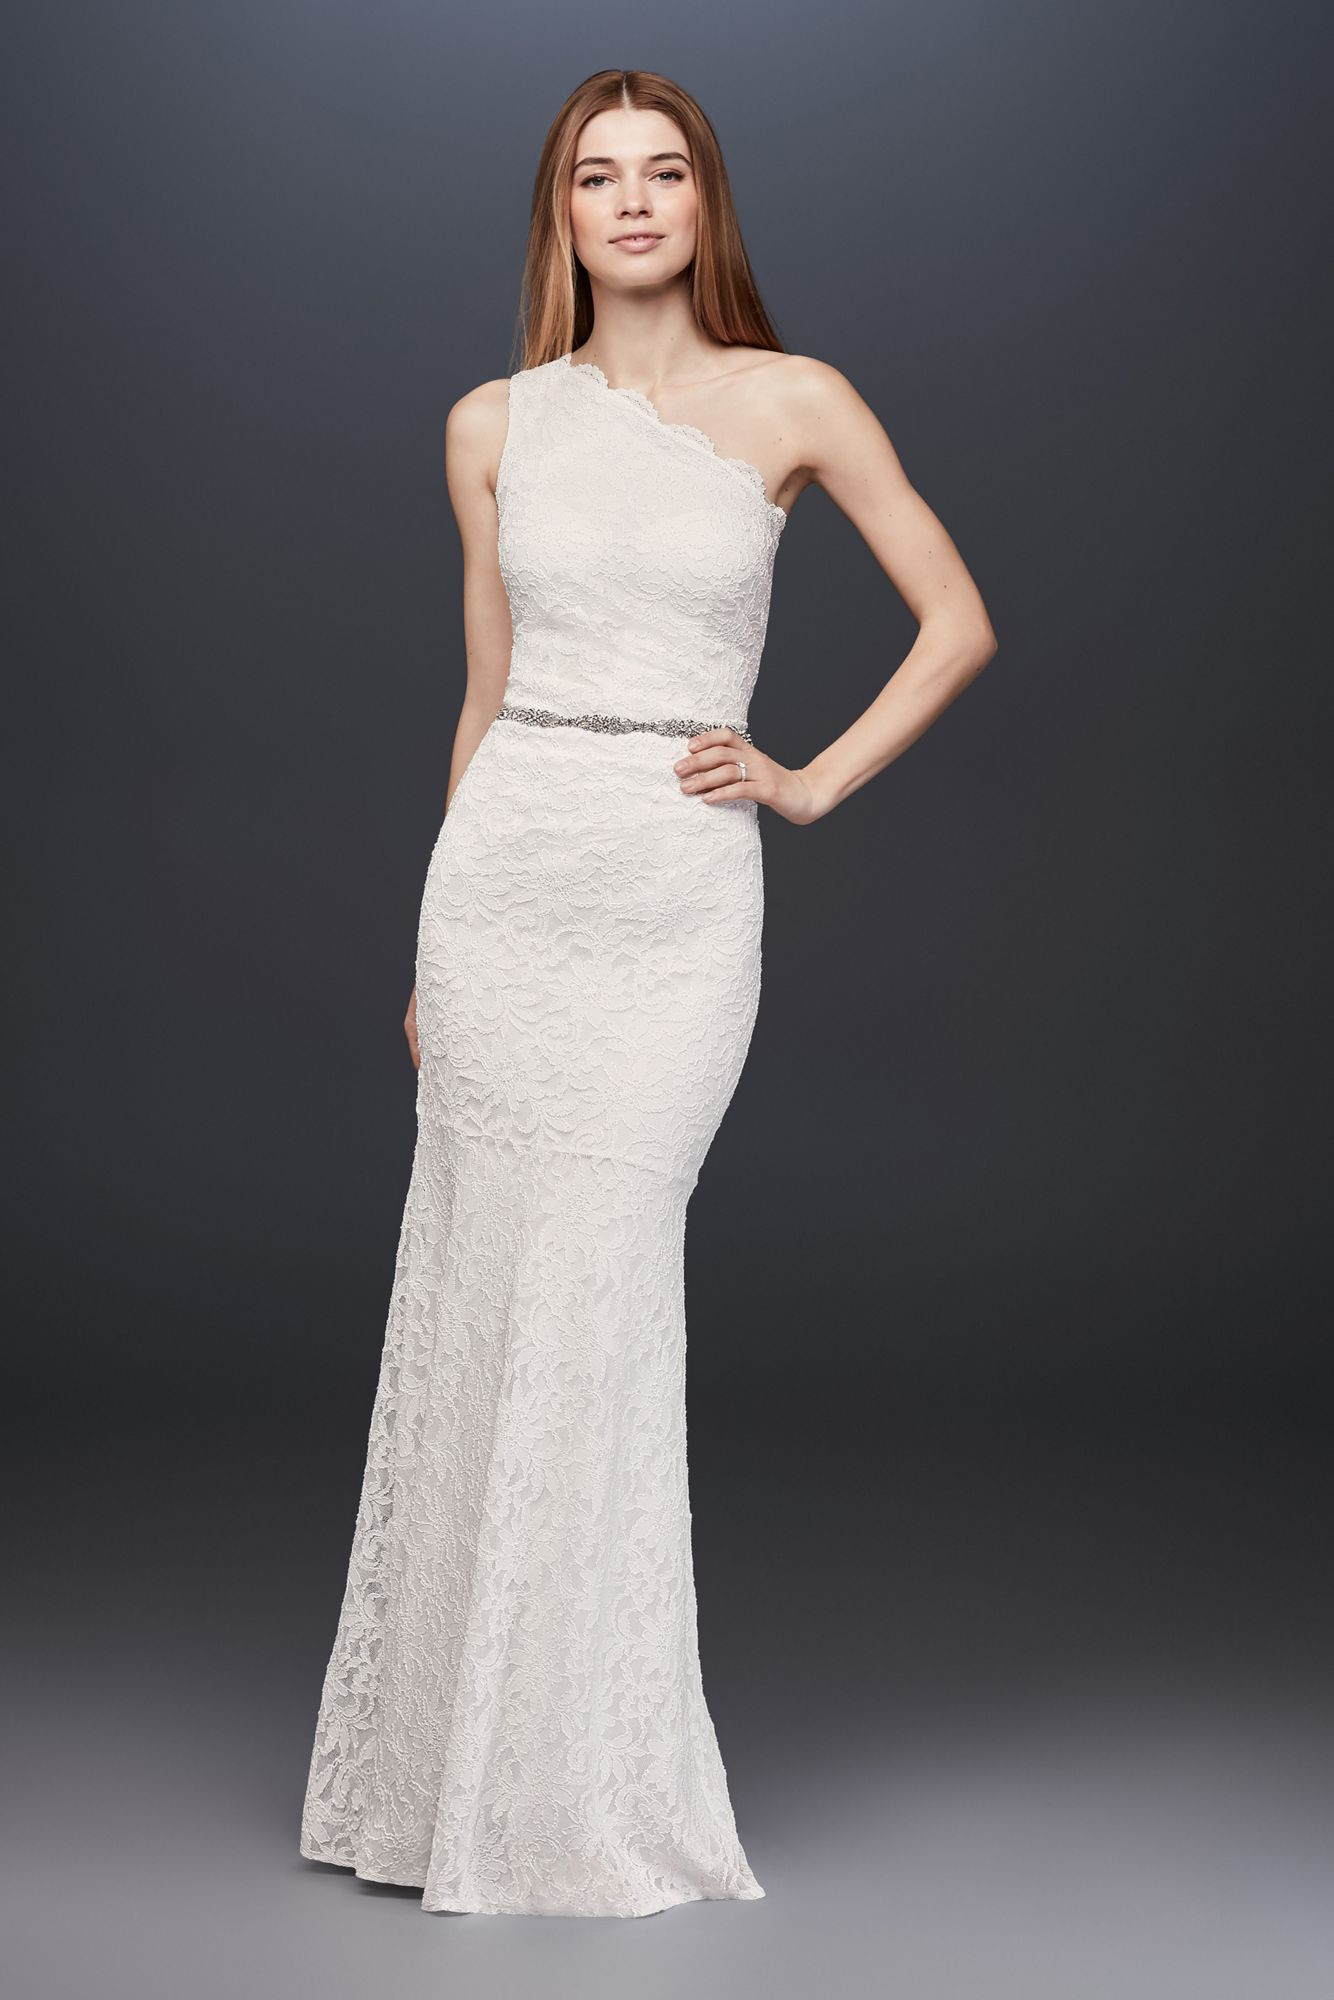 Lace Sheath Wedding Dress
 Elegant e shoulder Gliter Lace Sheath Bridal Dress Style